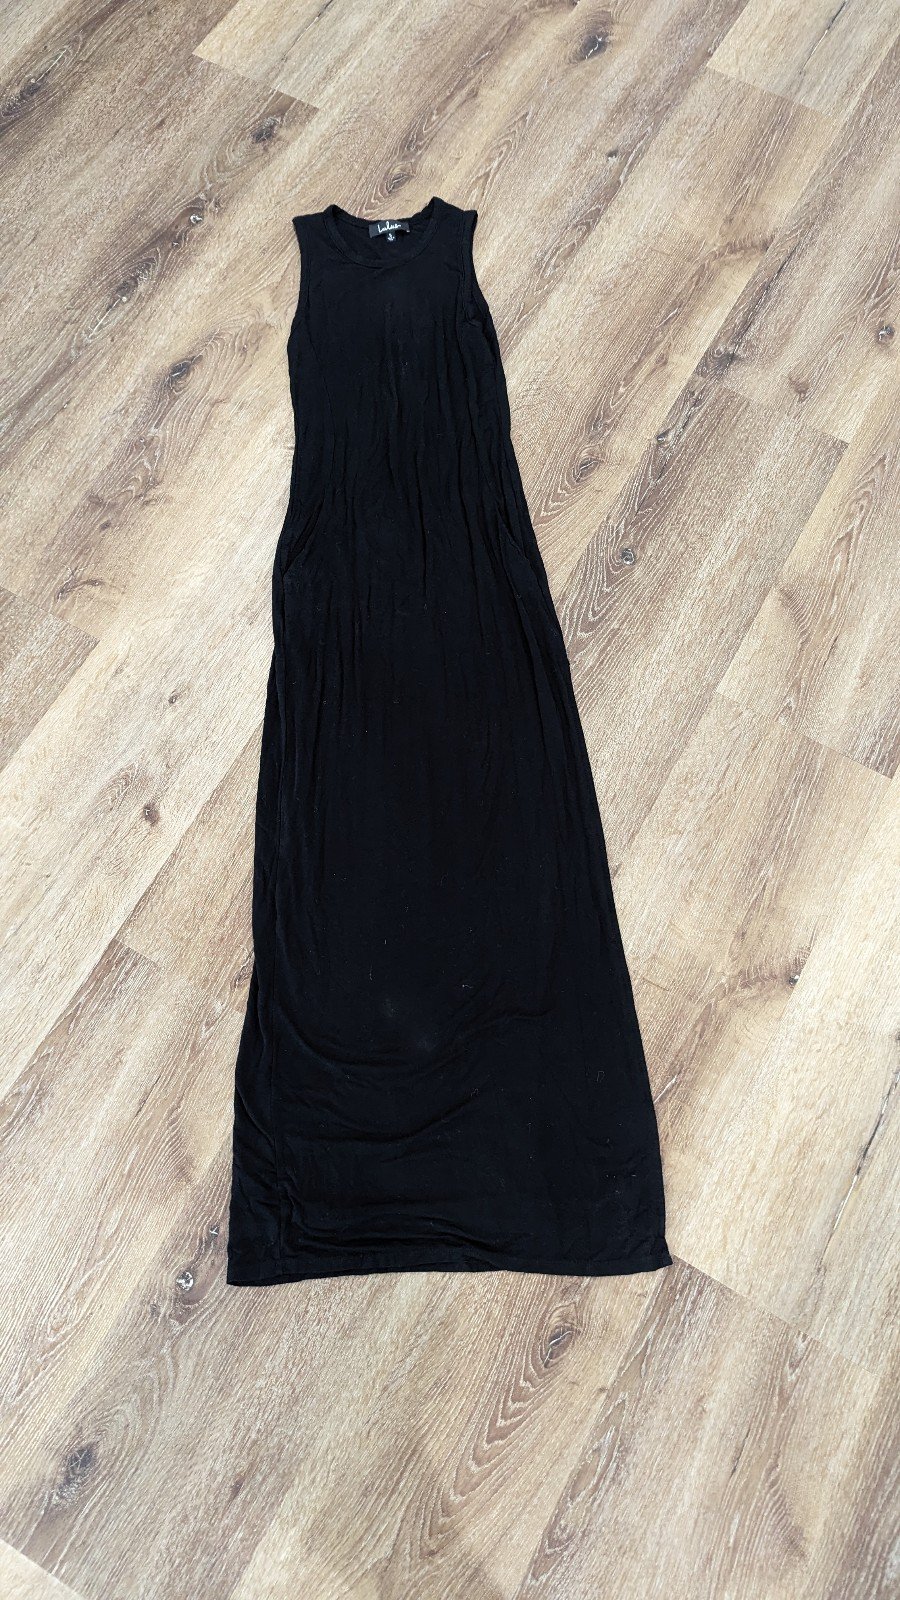 black long dress sleeveless sz S fXsxJaHVV